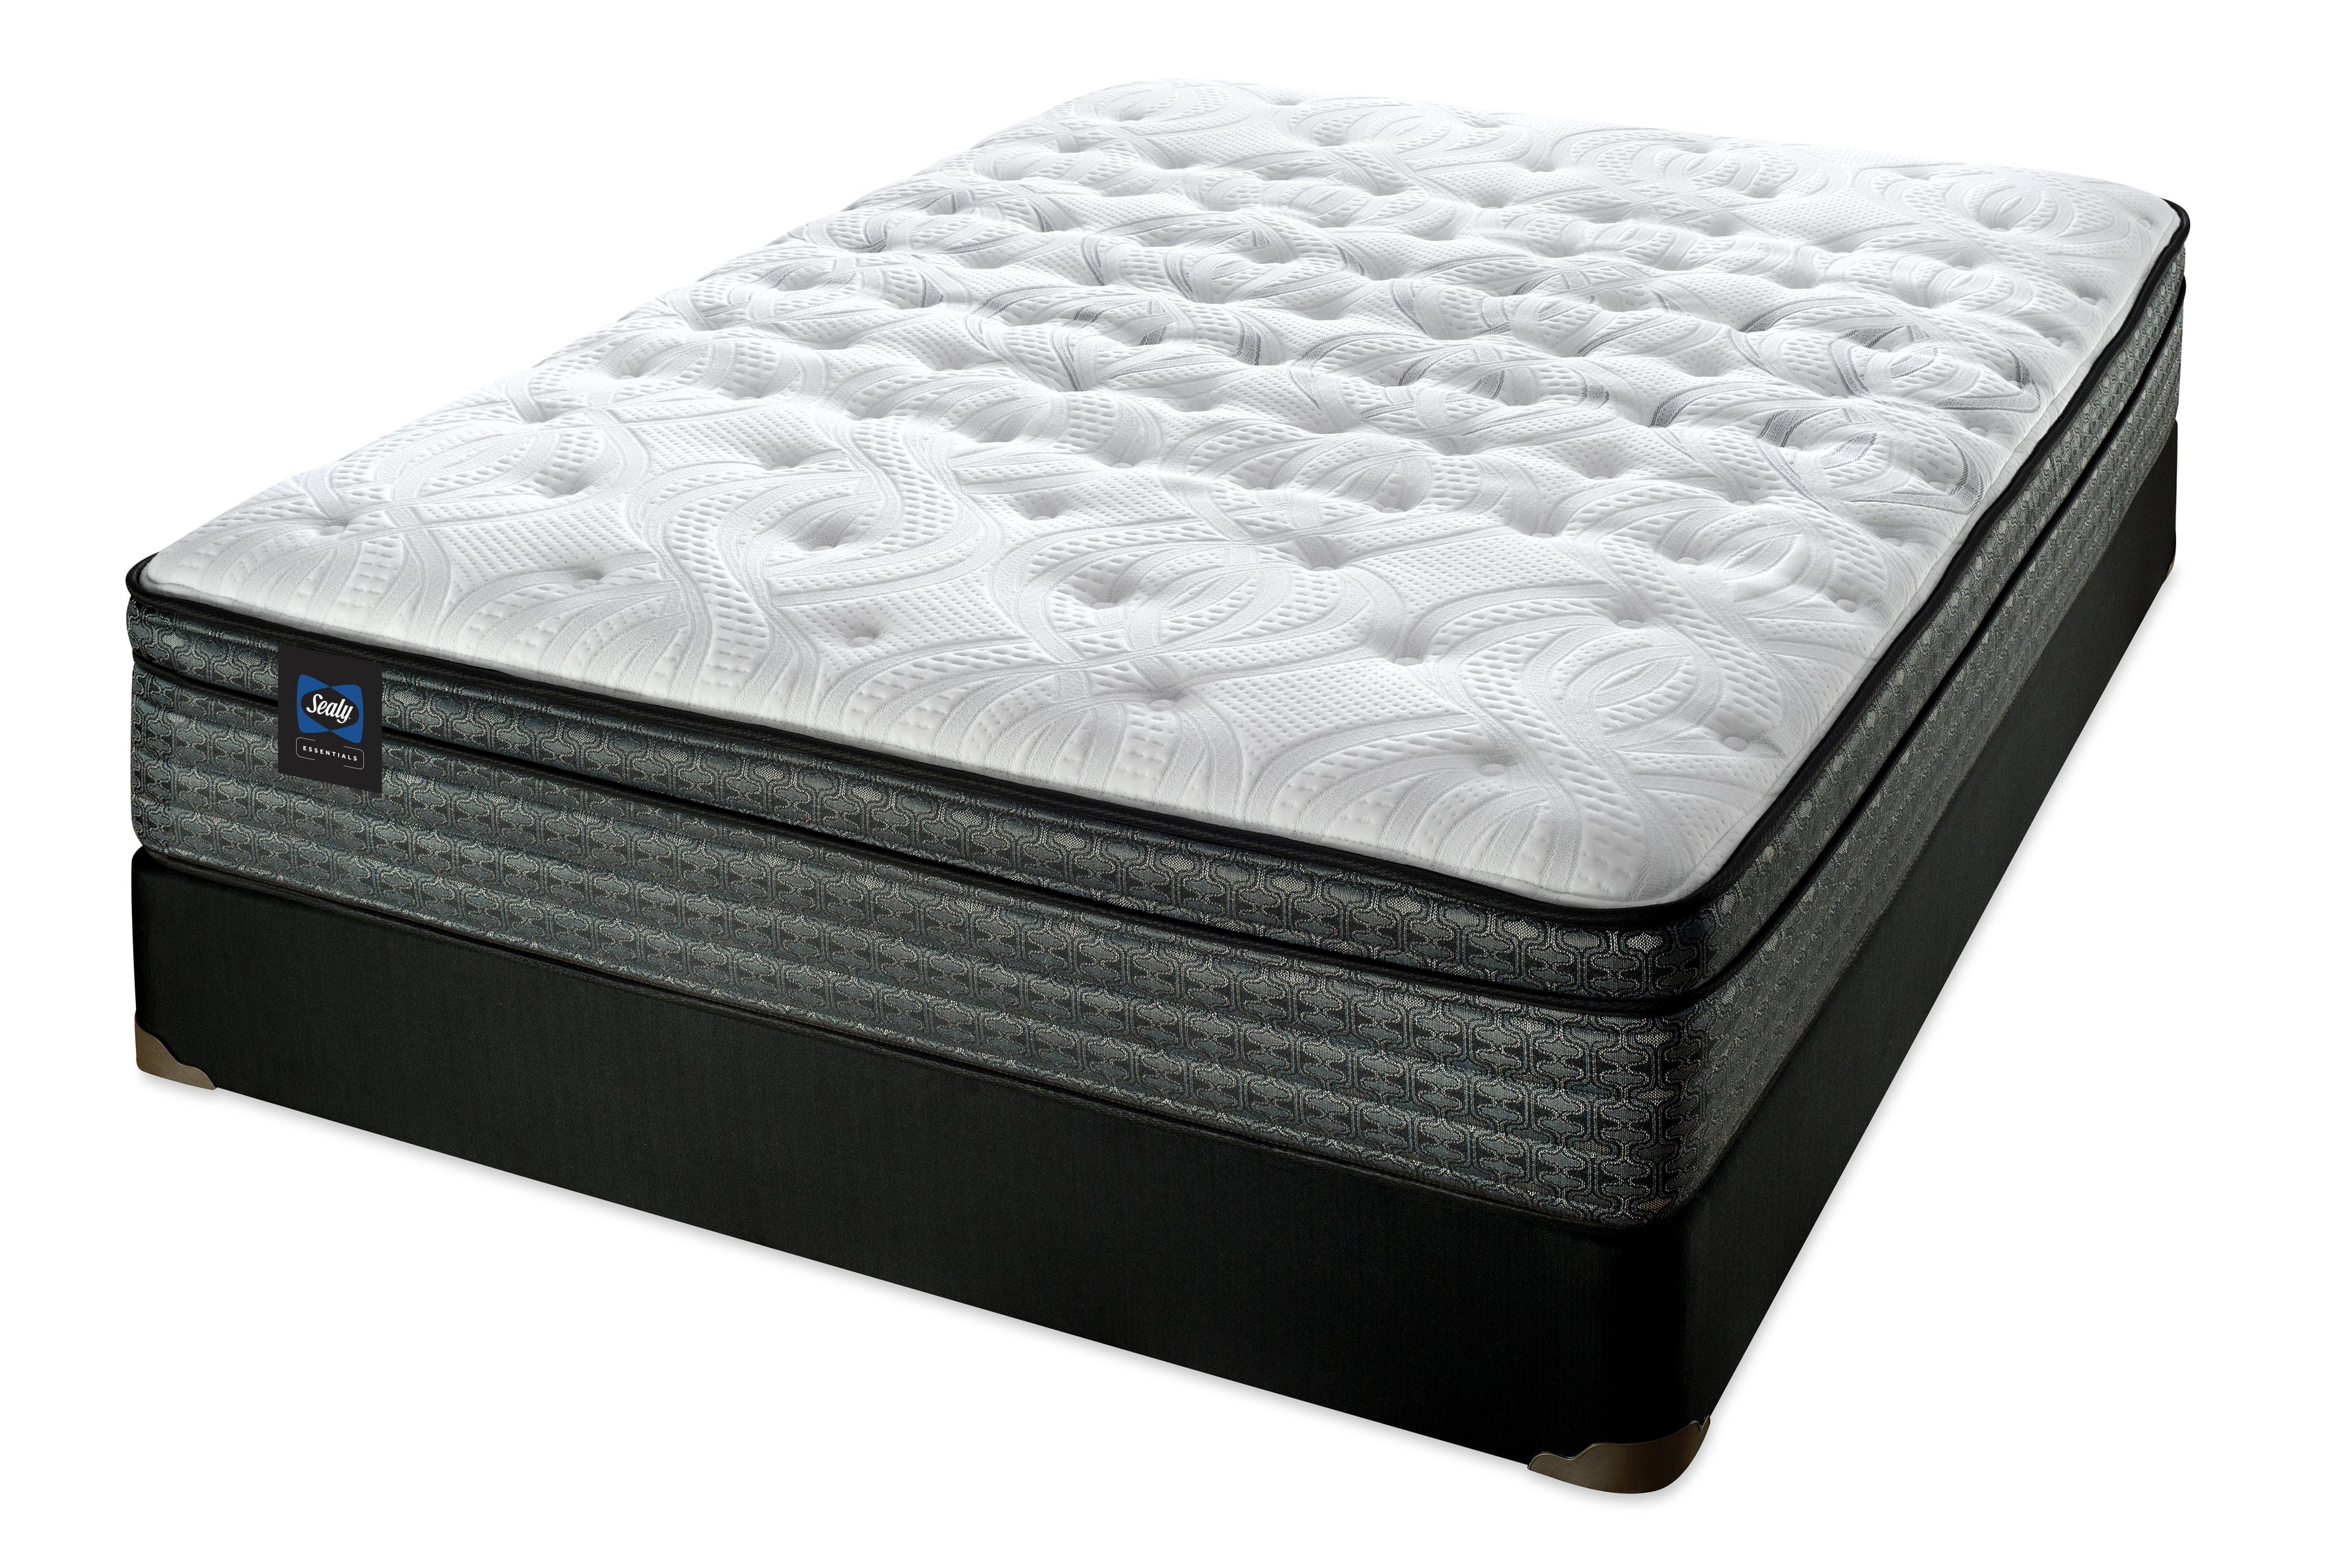 Travesseiro Comfort Revolution Hydraluxe Gel Pillow Sealy 45x65 cm